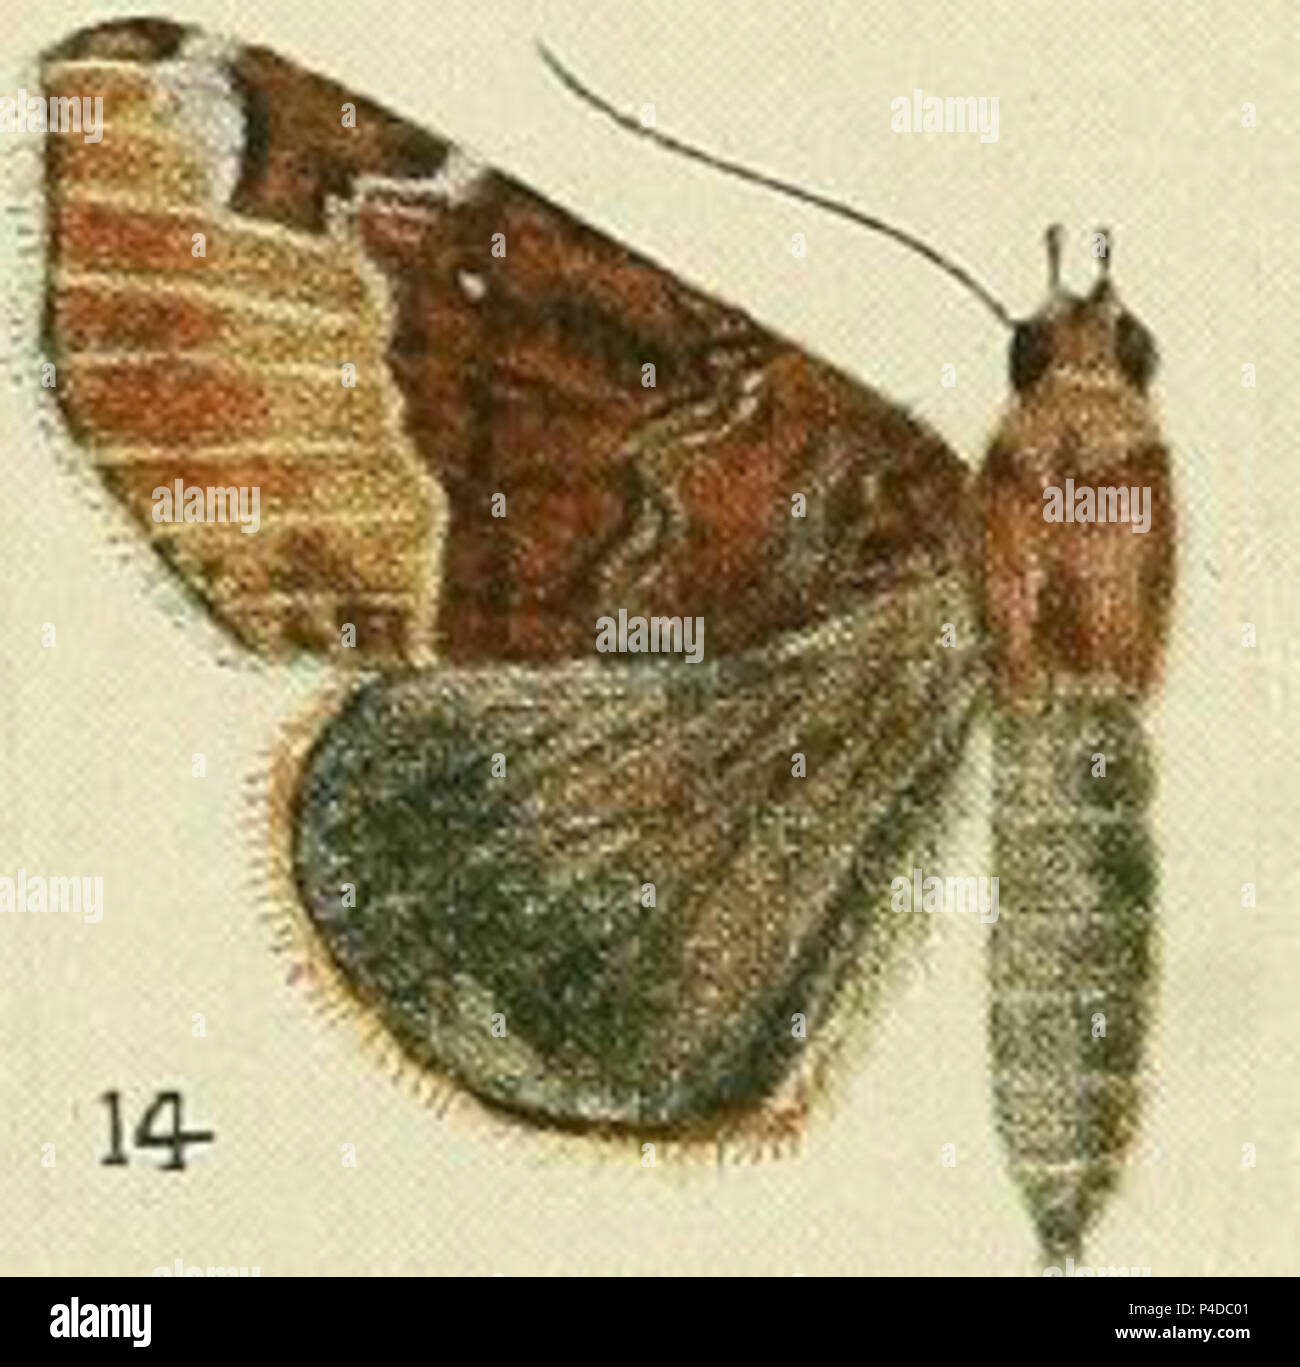 14-(Giria bubastis) Giria pectinicornis (Bethune-Baker 1909). Stock Photo